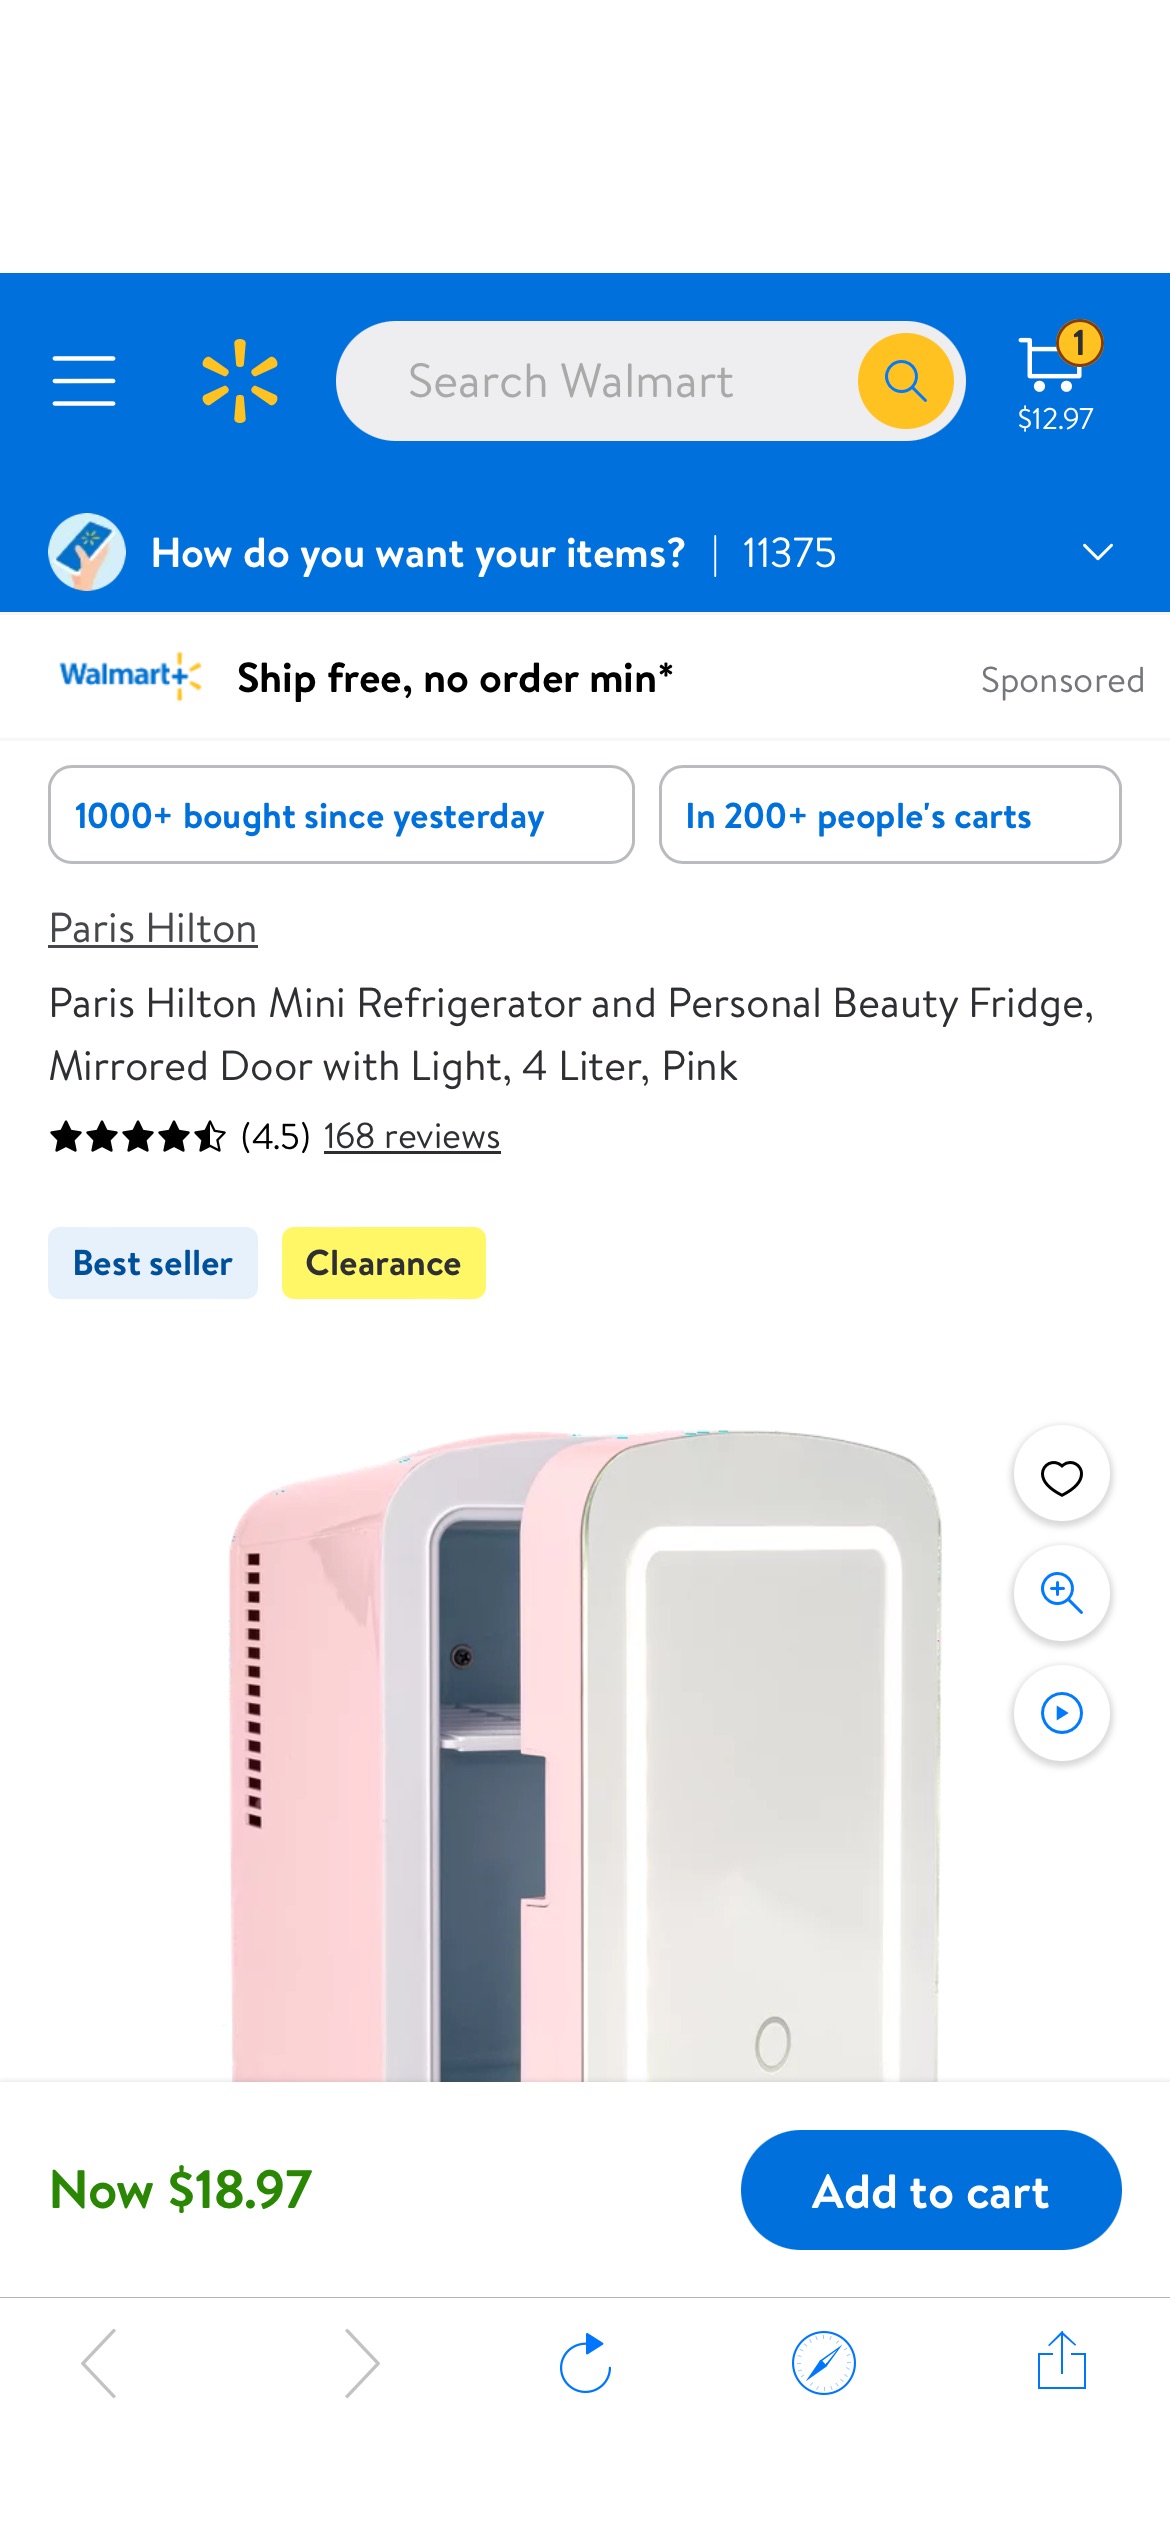 Paris Hilton Mini Refrigerator and Personal Beauty Fridge, Mirrored Door with Light, 4 Liter, Pink - Walmart.com